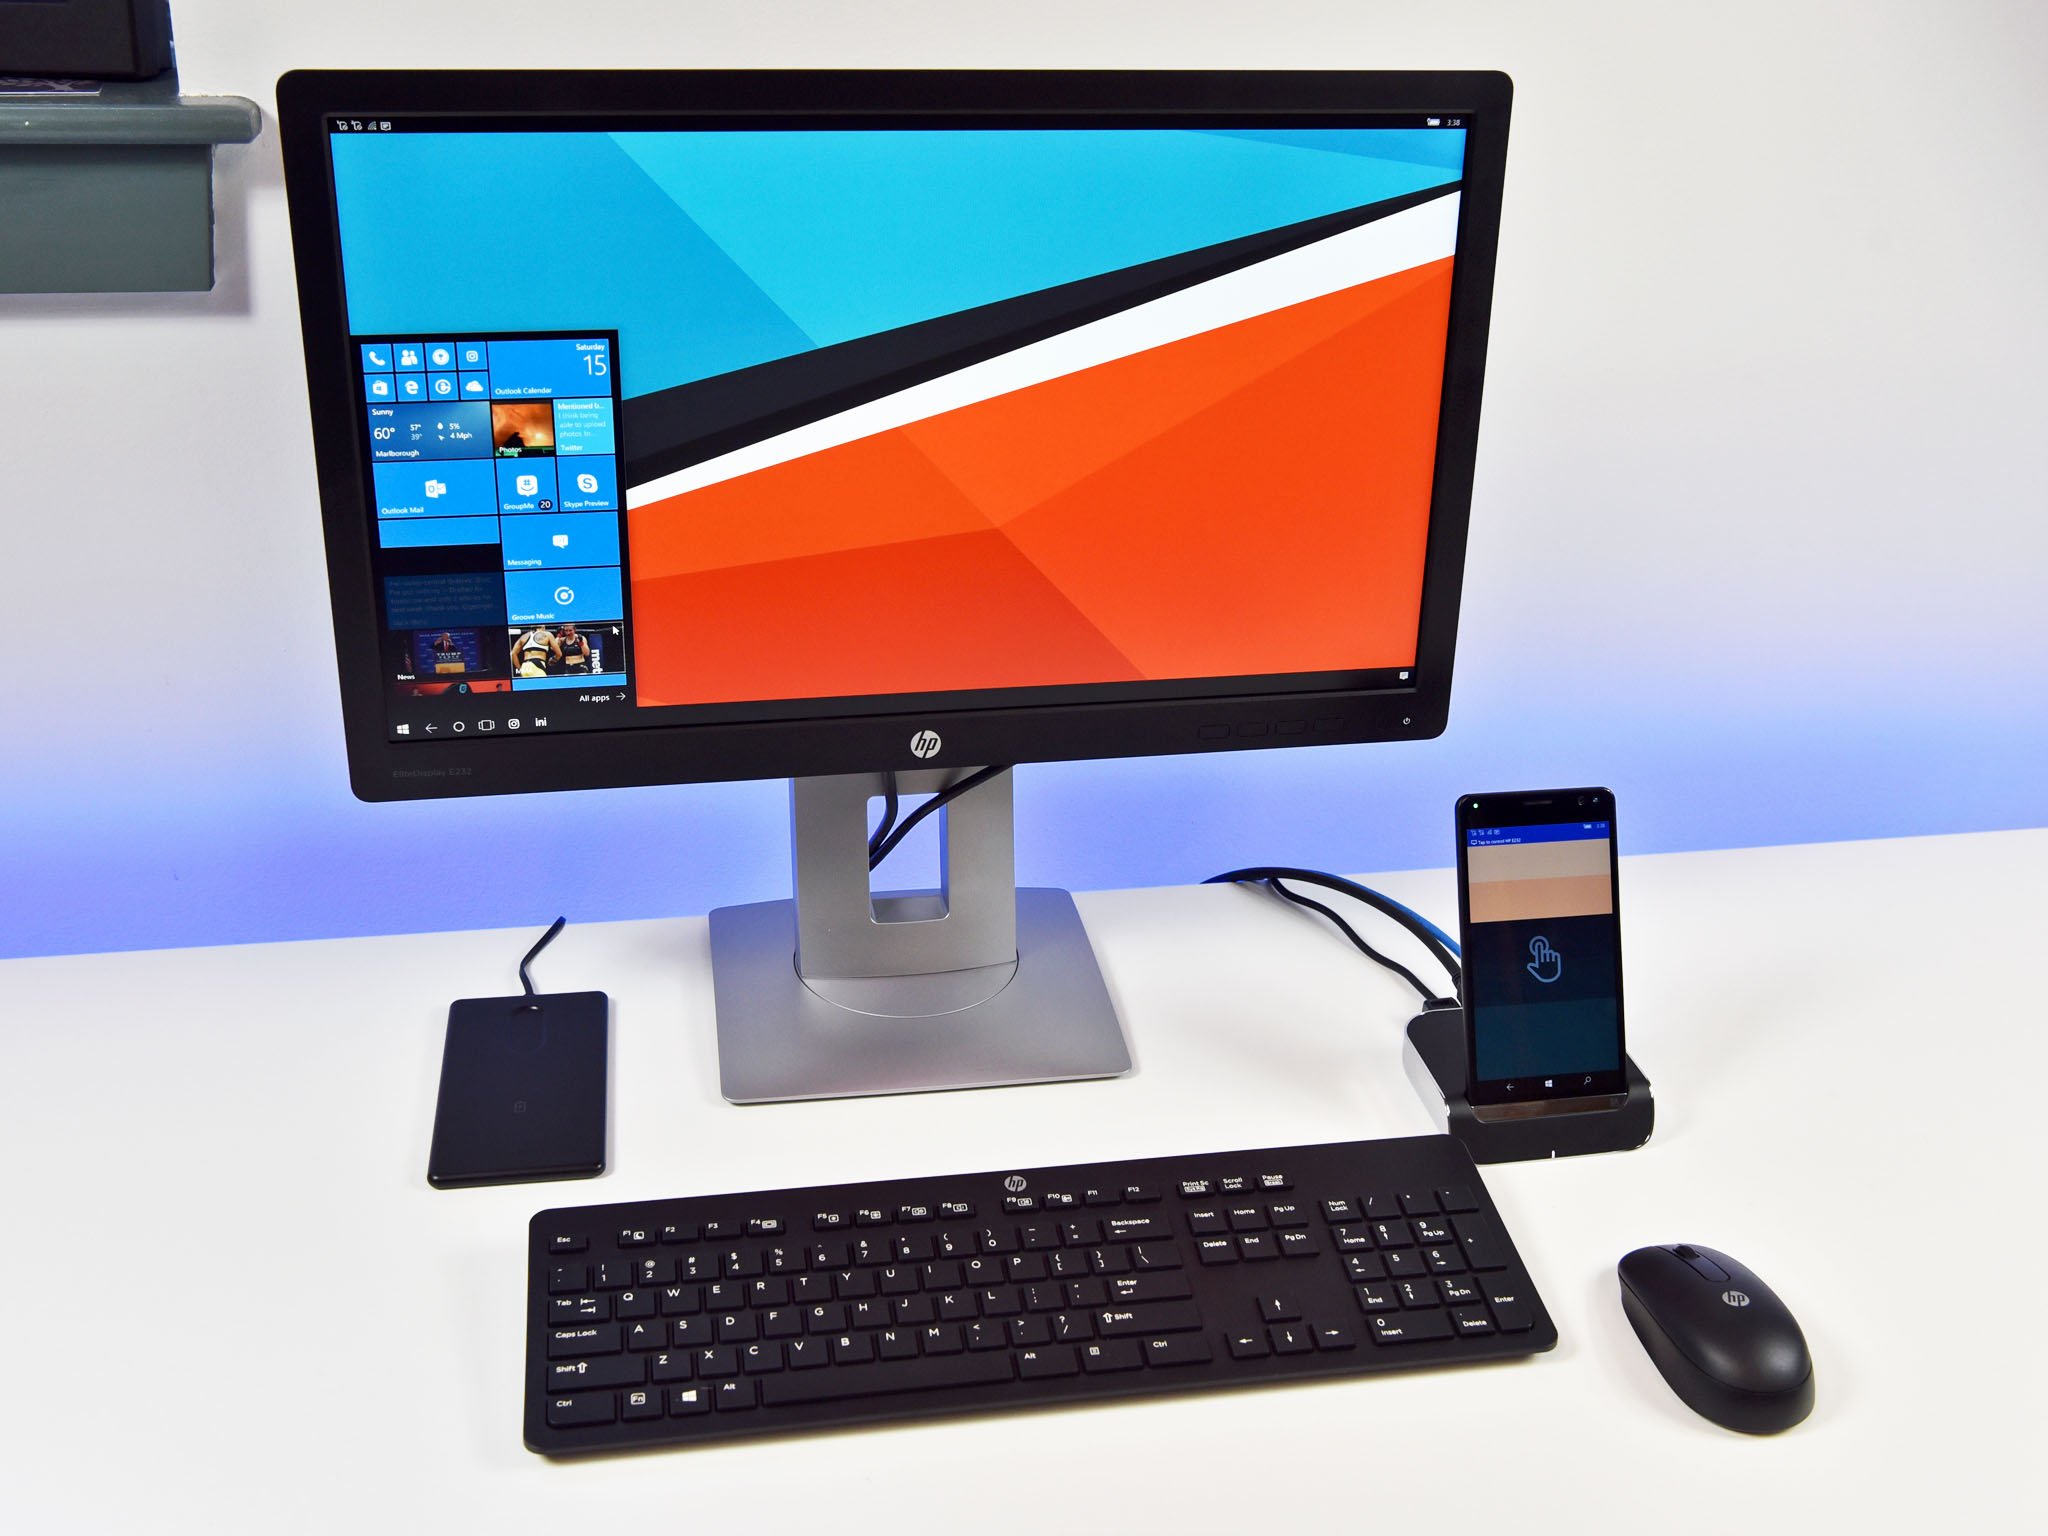 HP Elite x3 and Desk Dock